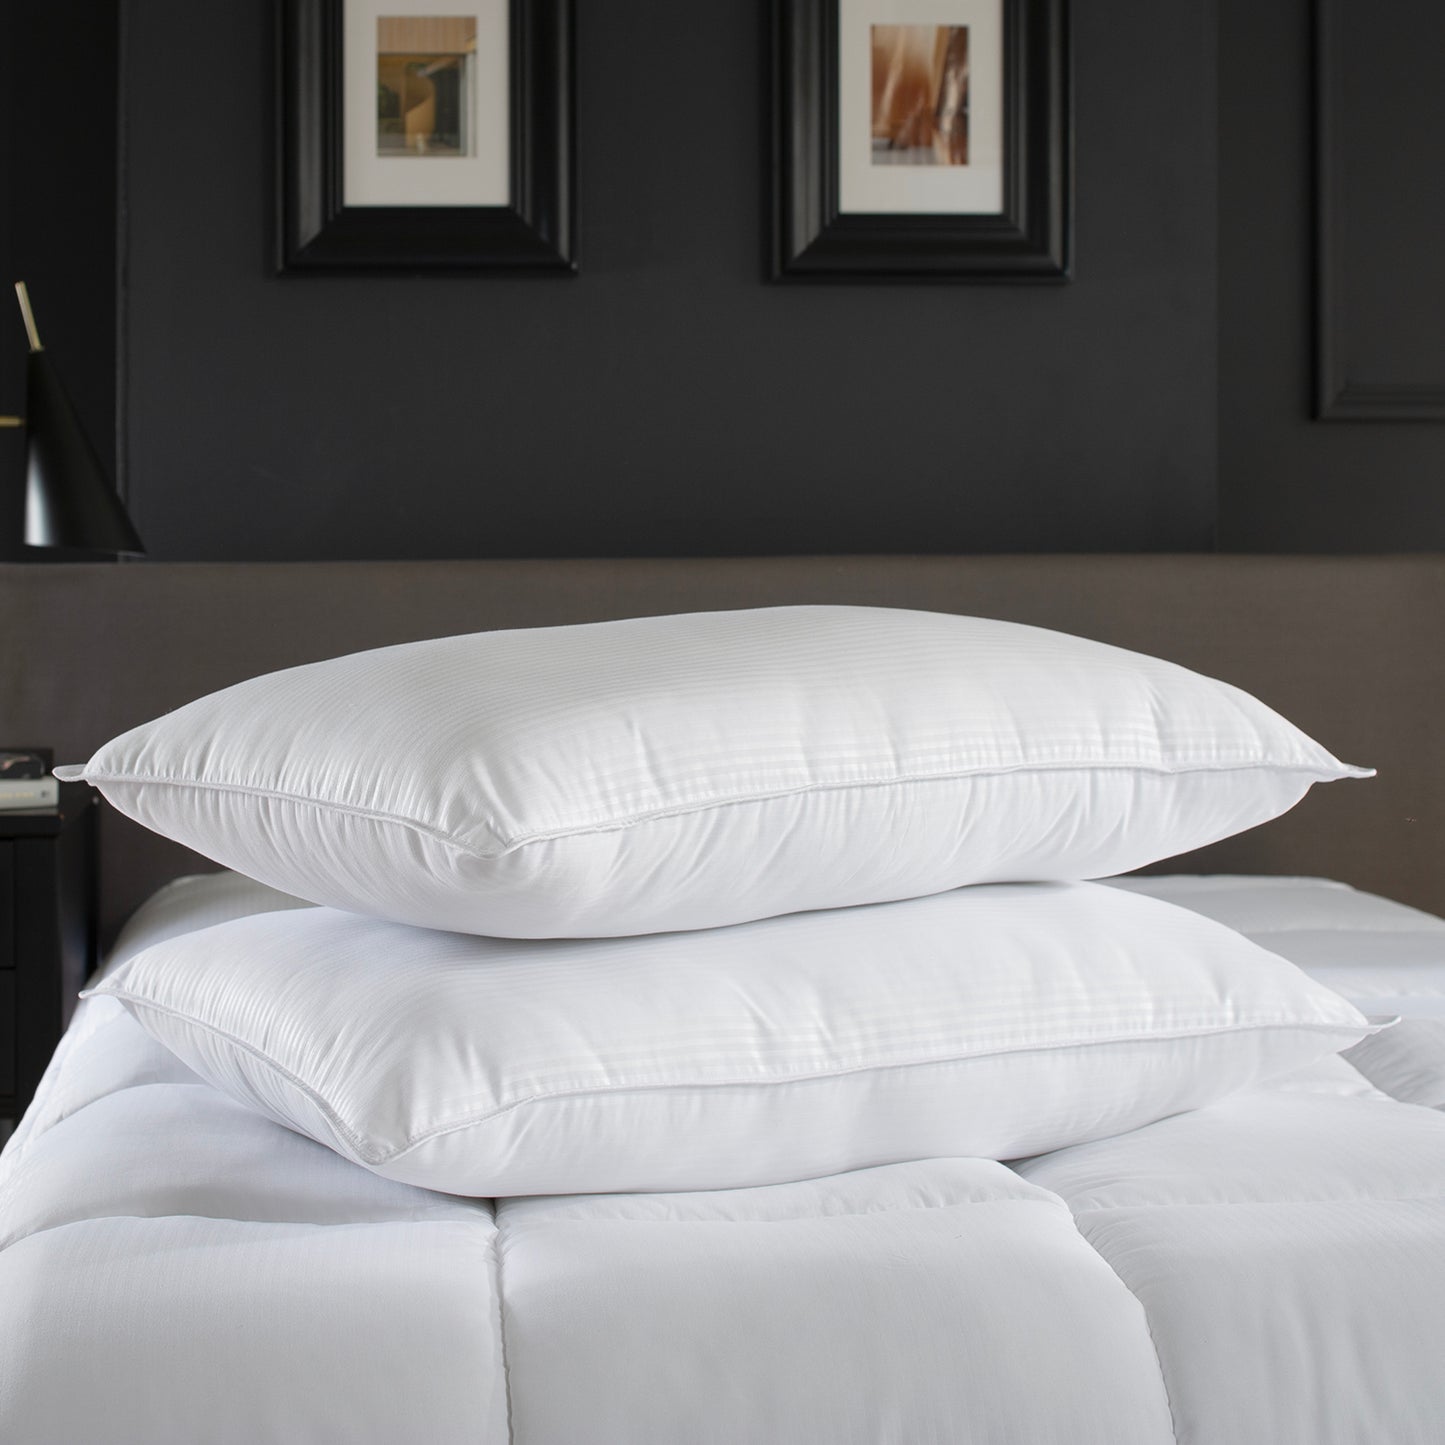 The Lyndon Company Premium Hotel Pillow Pair - Medium Support